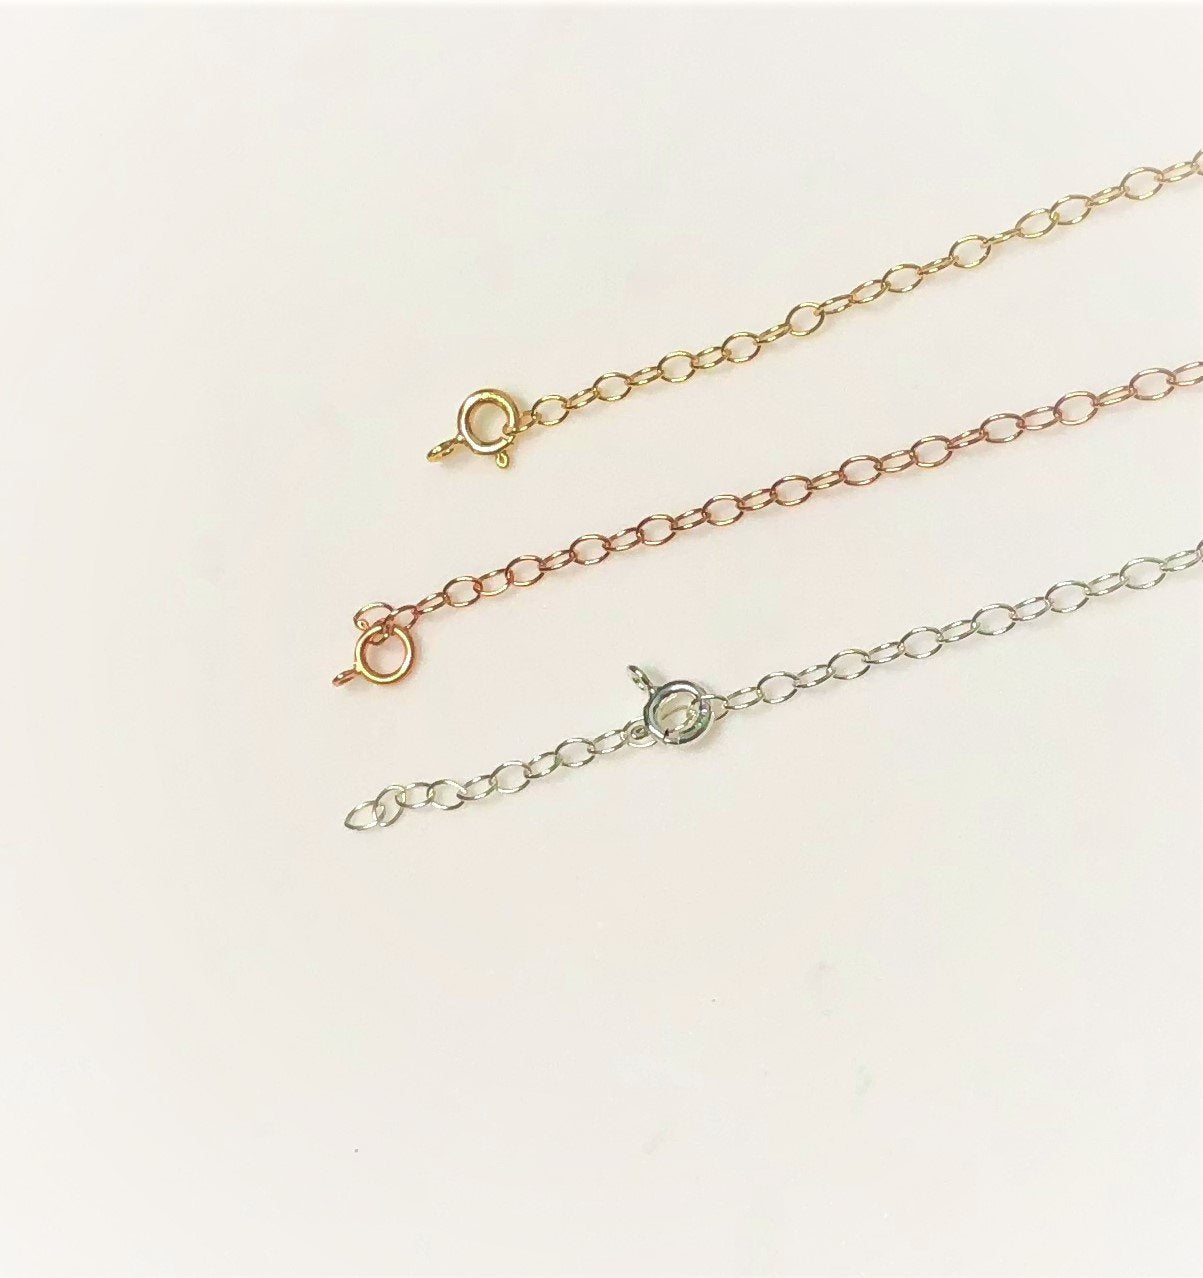 Extender Chain For Necklace or Bracelet